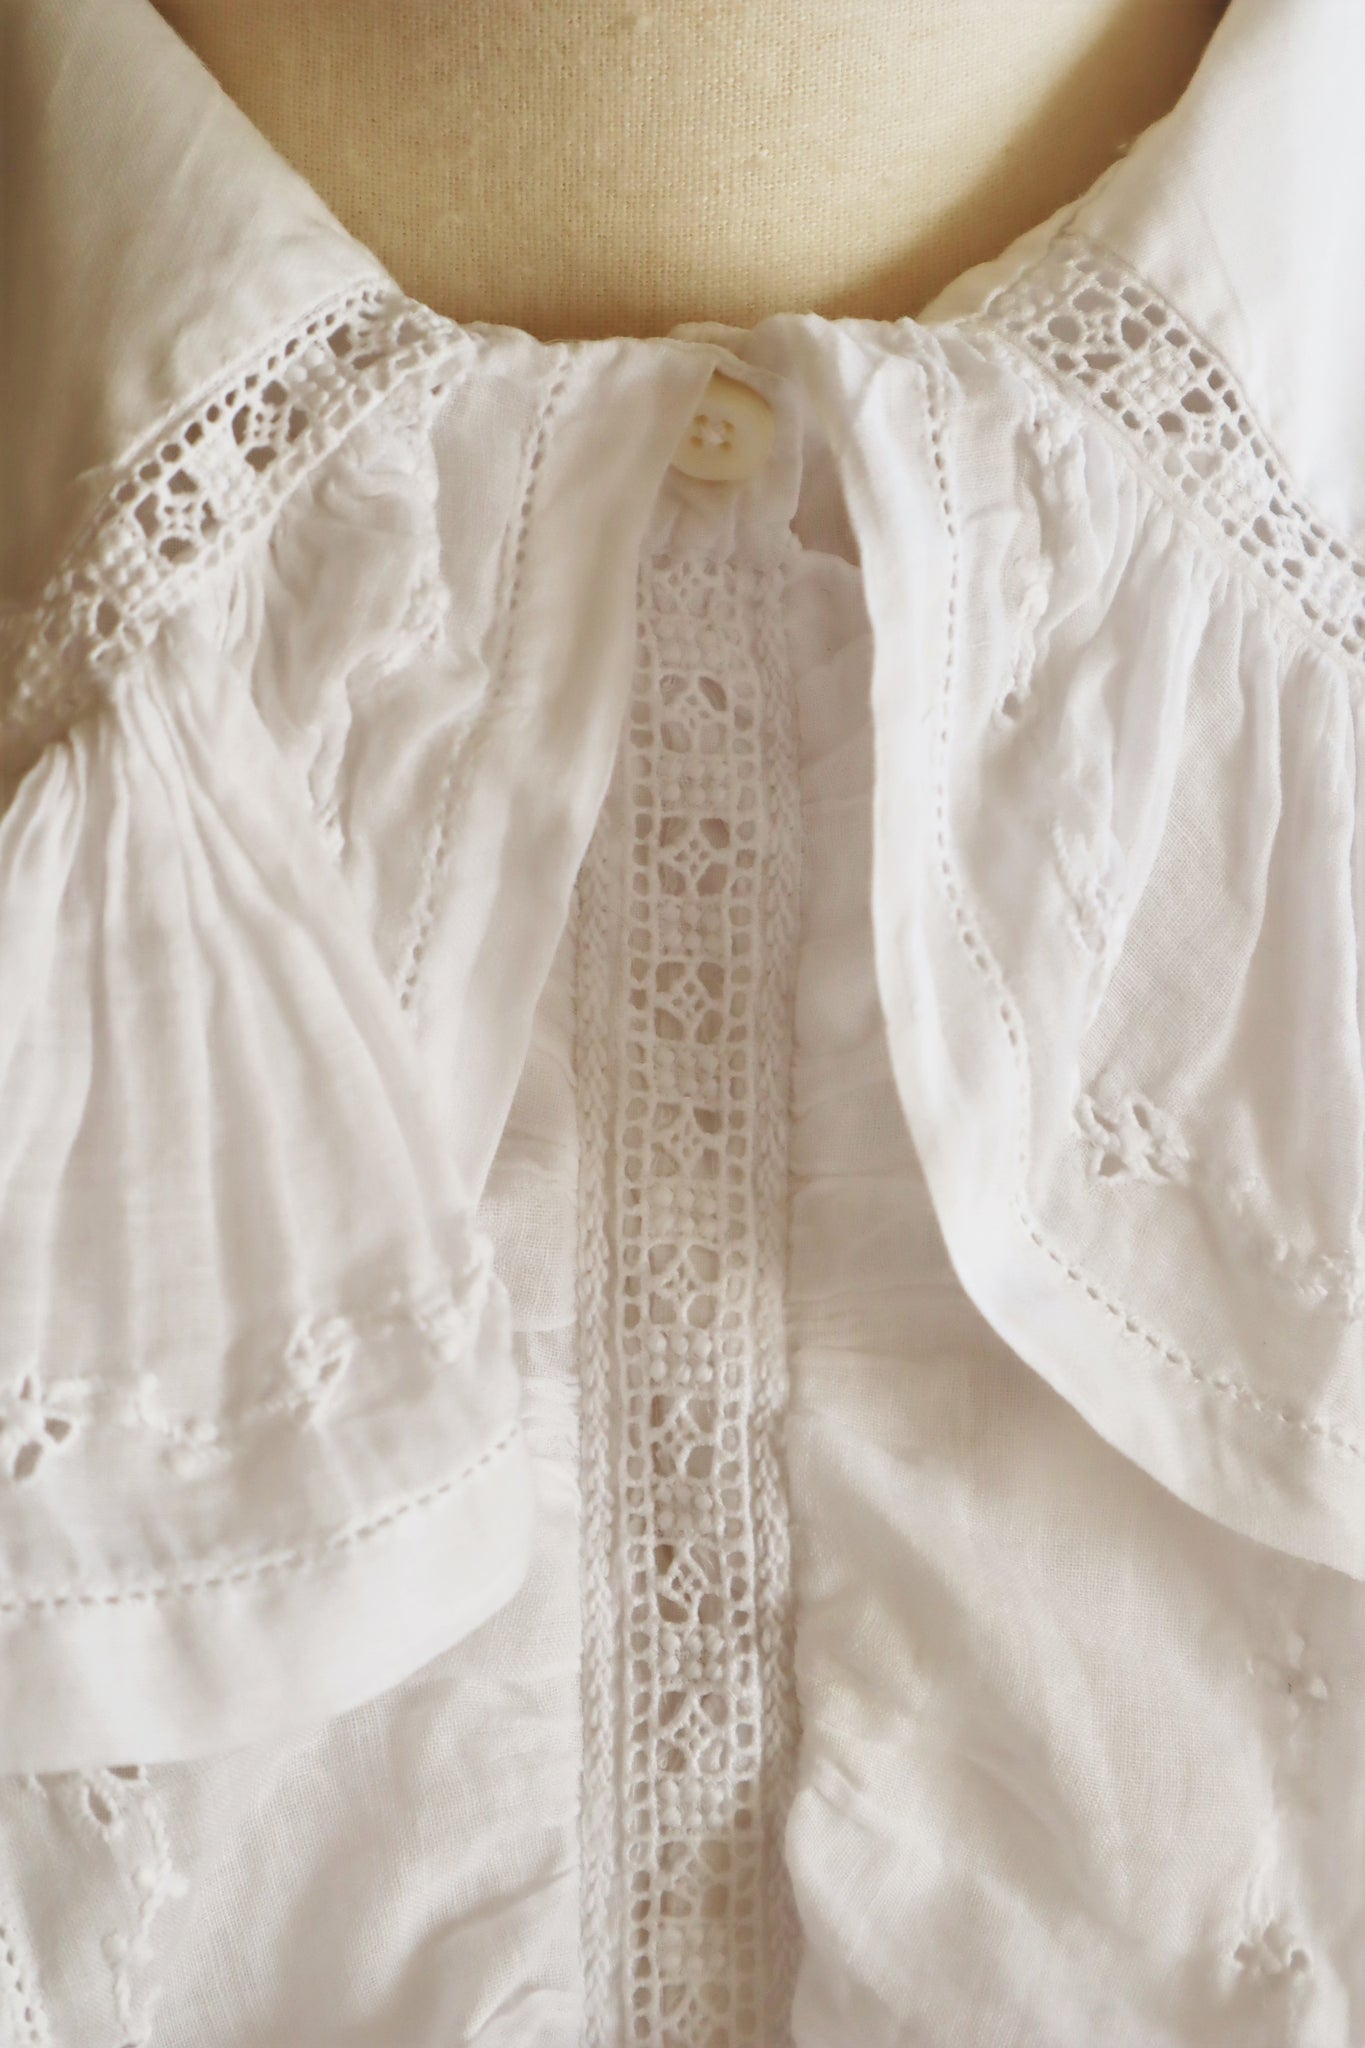 1900s All Hand Sewn Ruffled Collar White Cotton Dress